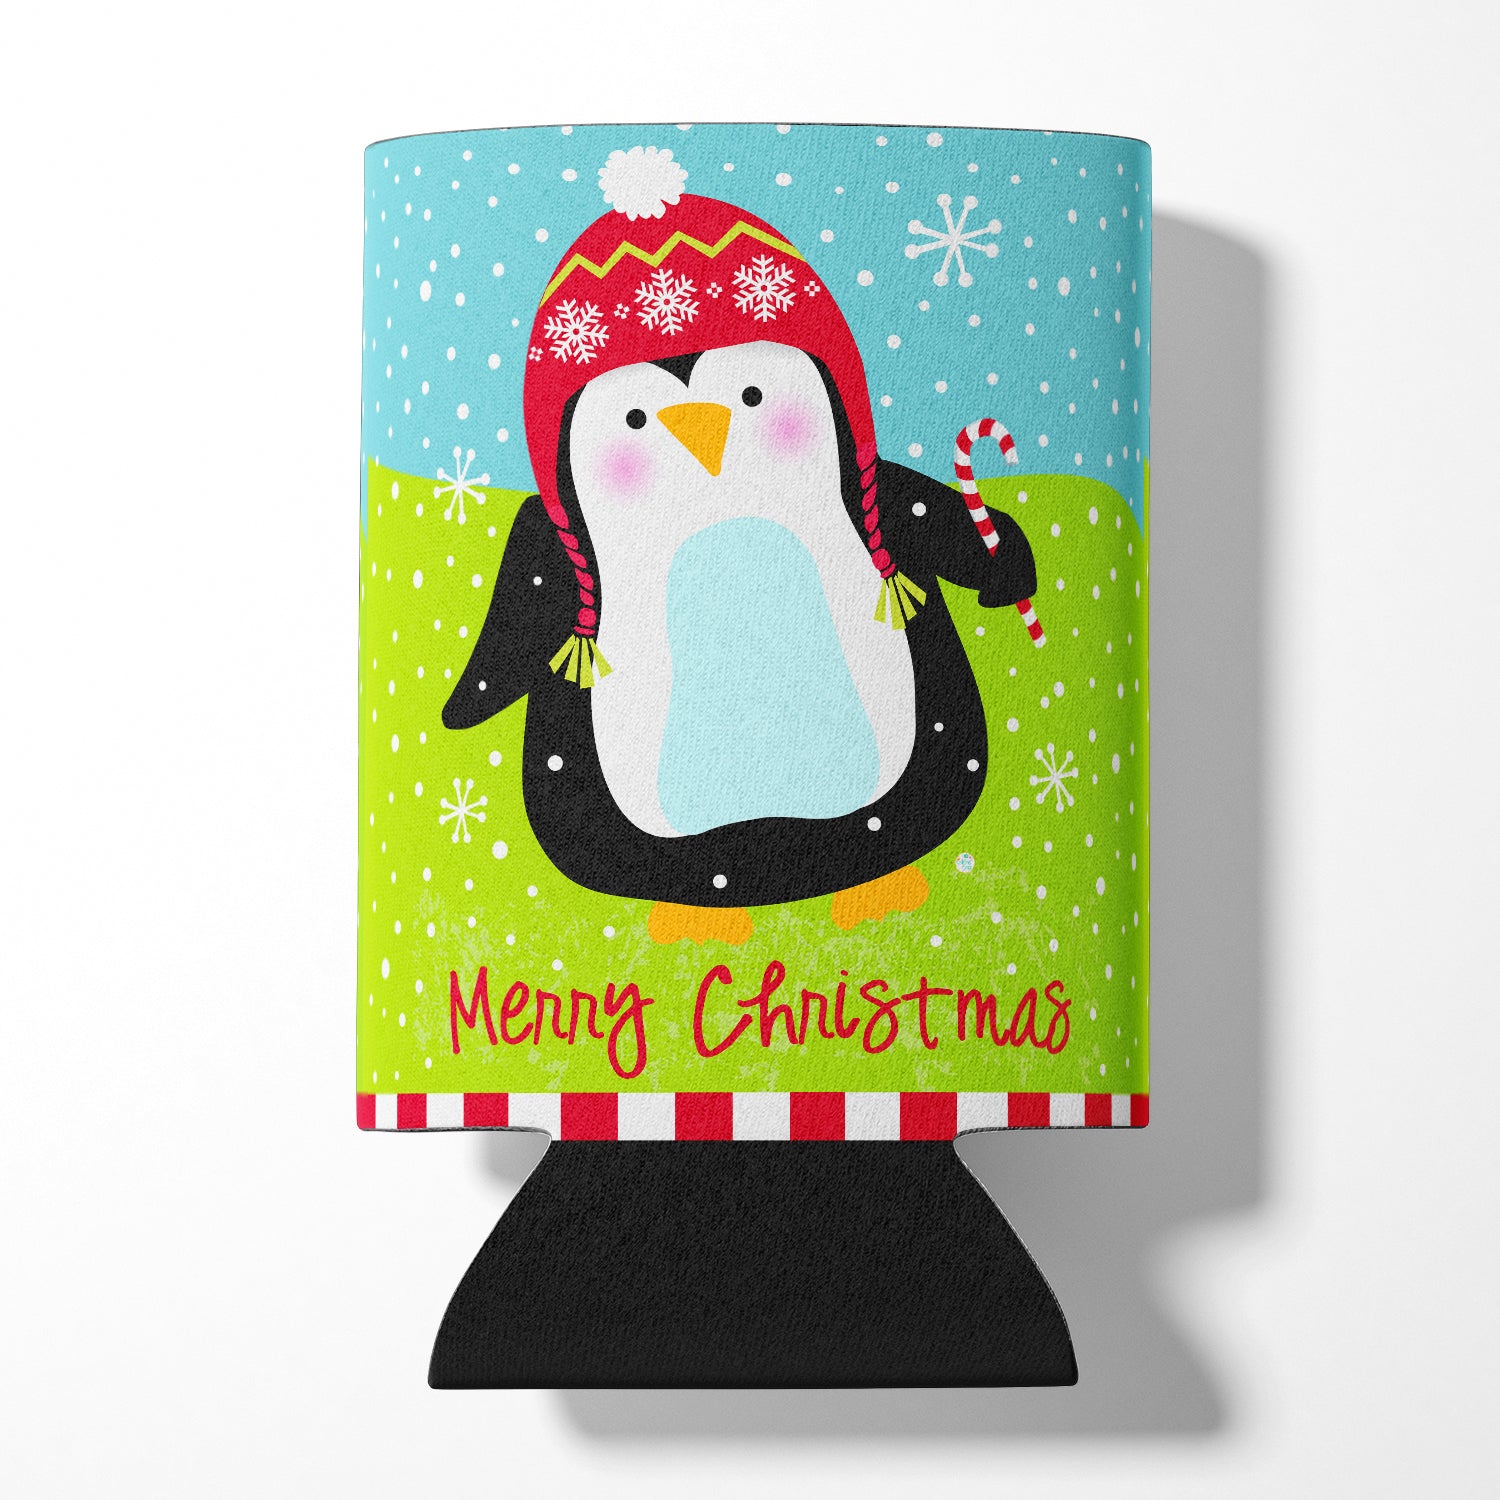 Merry Christmas Happy Penguin Can ou Bottle Hugger VHA3015CC